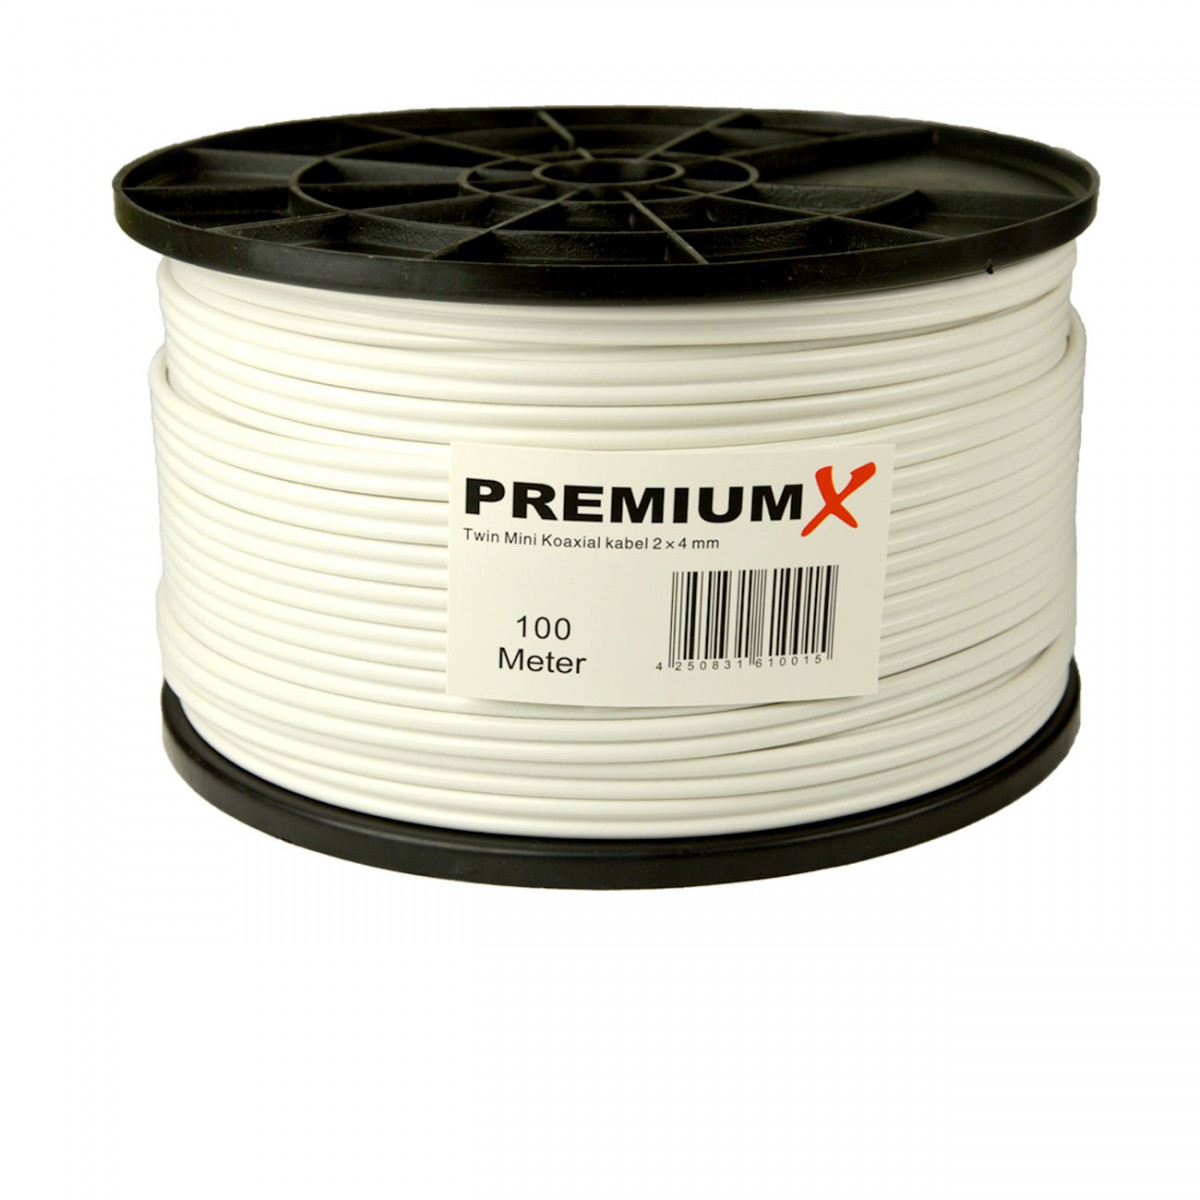 PREMIUMX 100m Sat Koaxial 2 4mm Kabel geschirmt x 90dB Weiß Antennenkabel Twin Antennenkabel 2-fach Mini